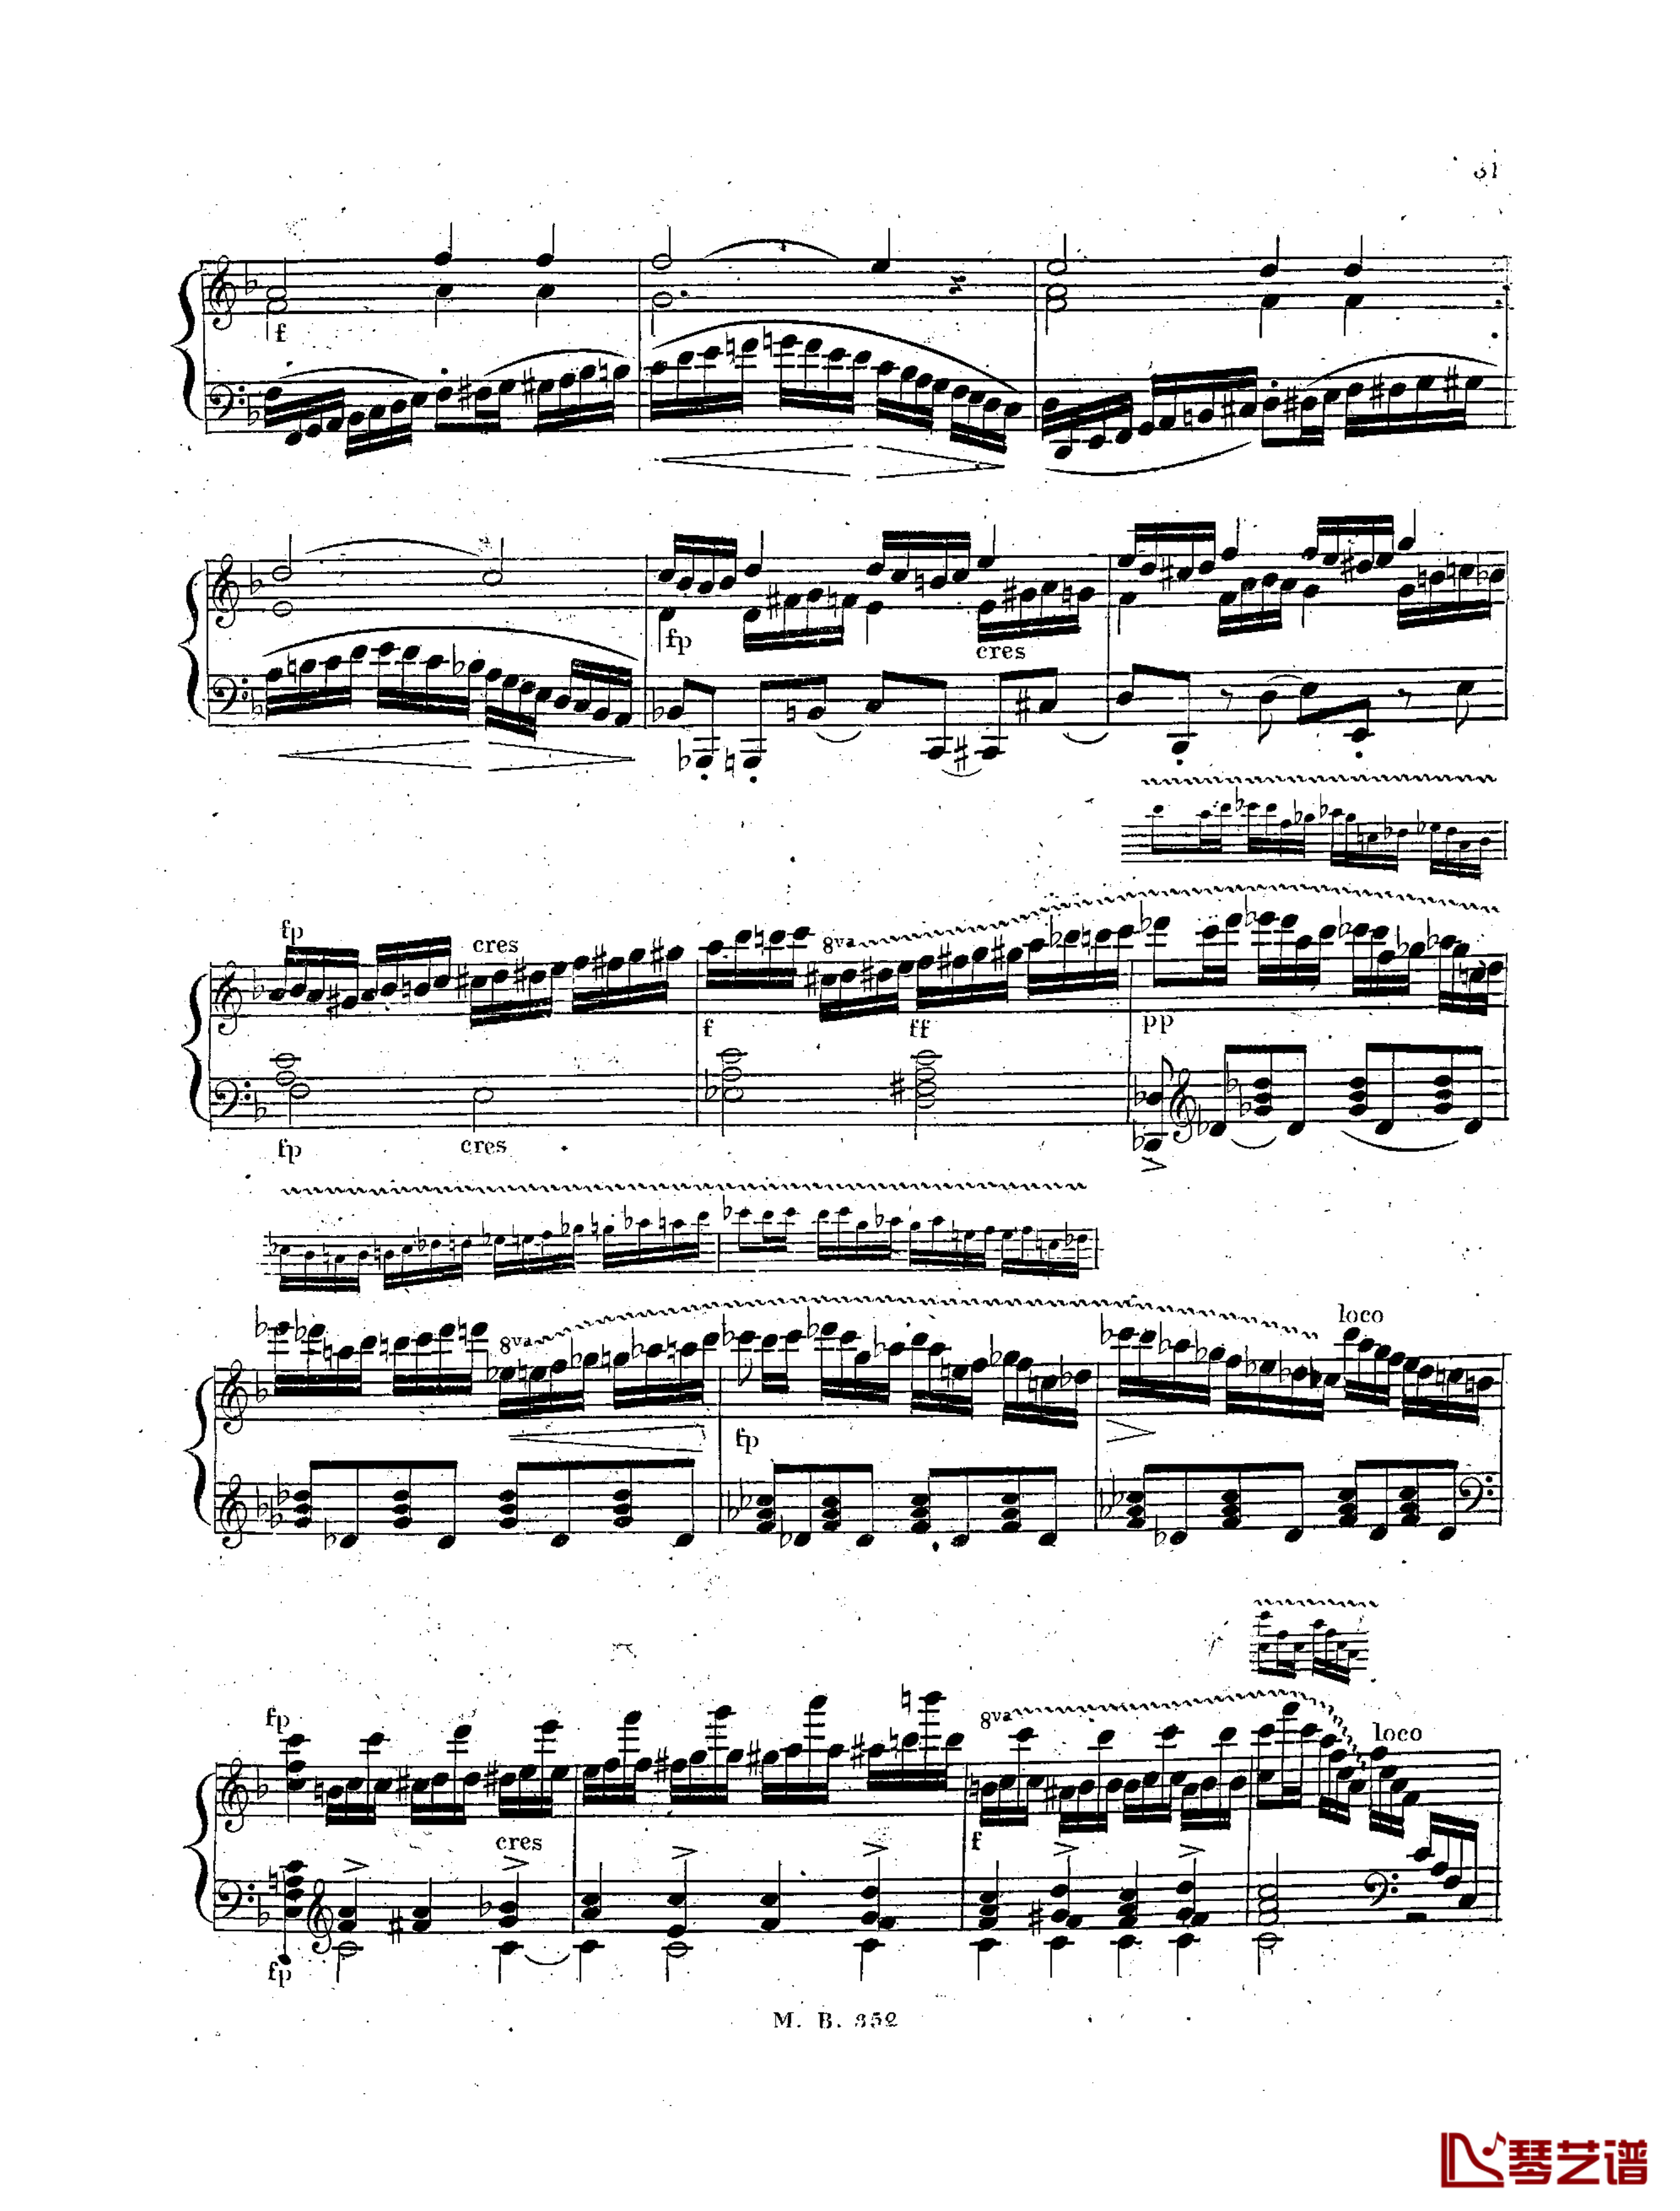  d小调第一钢琴协奏曲 Op.61  第三乐章钢琴谱-卡尔克布雷纳7